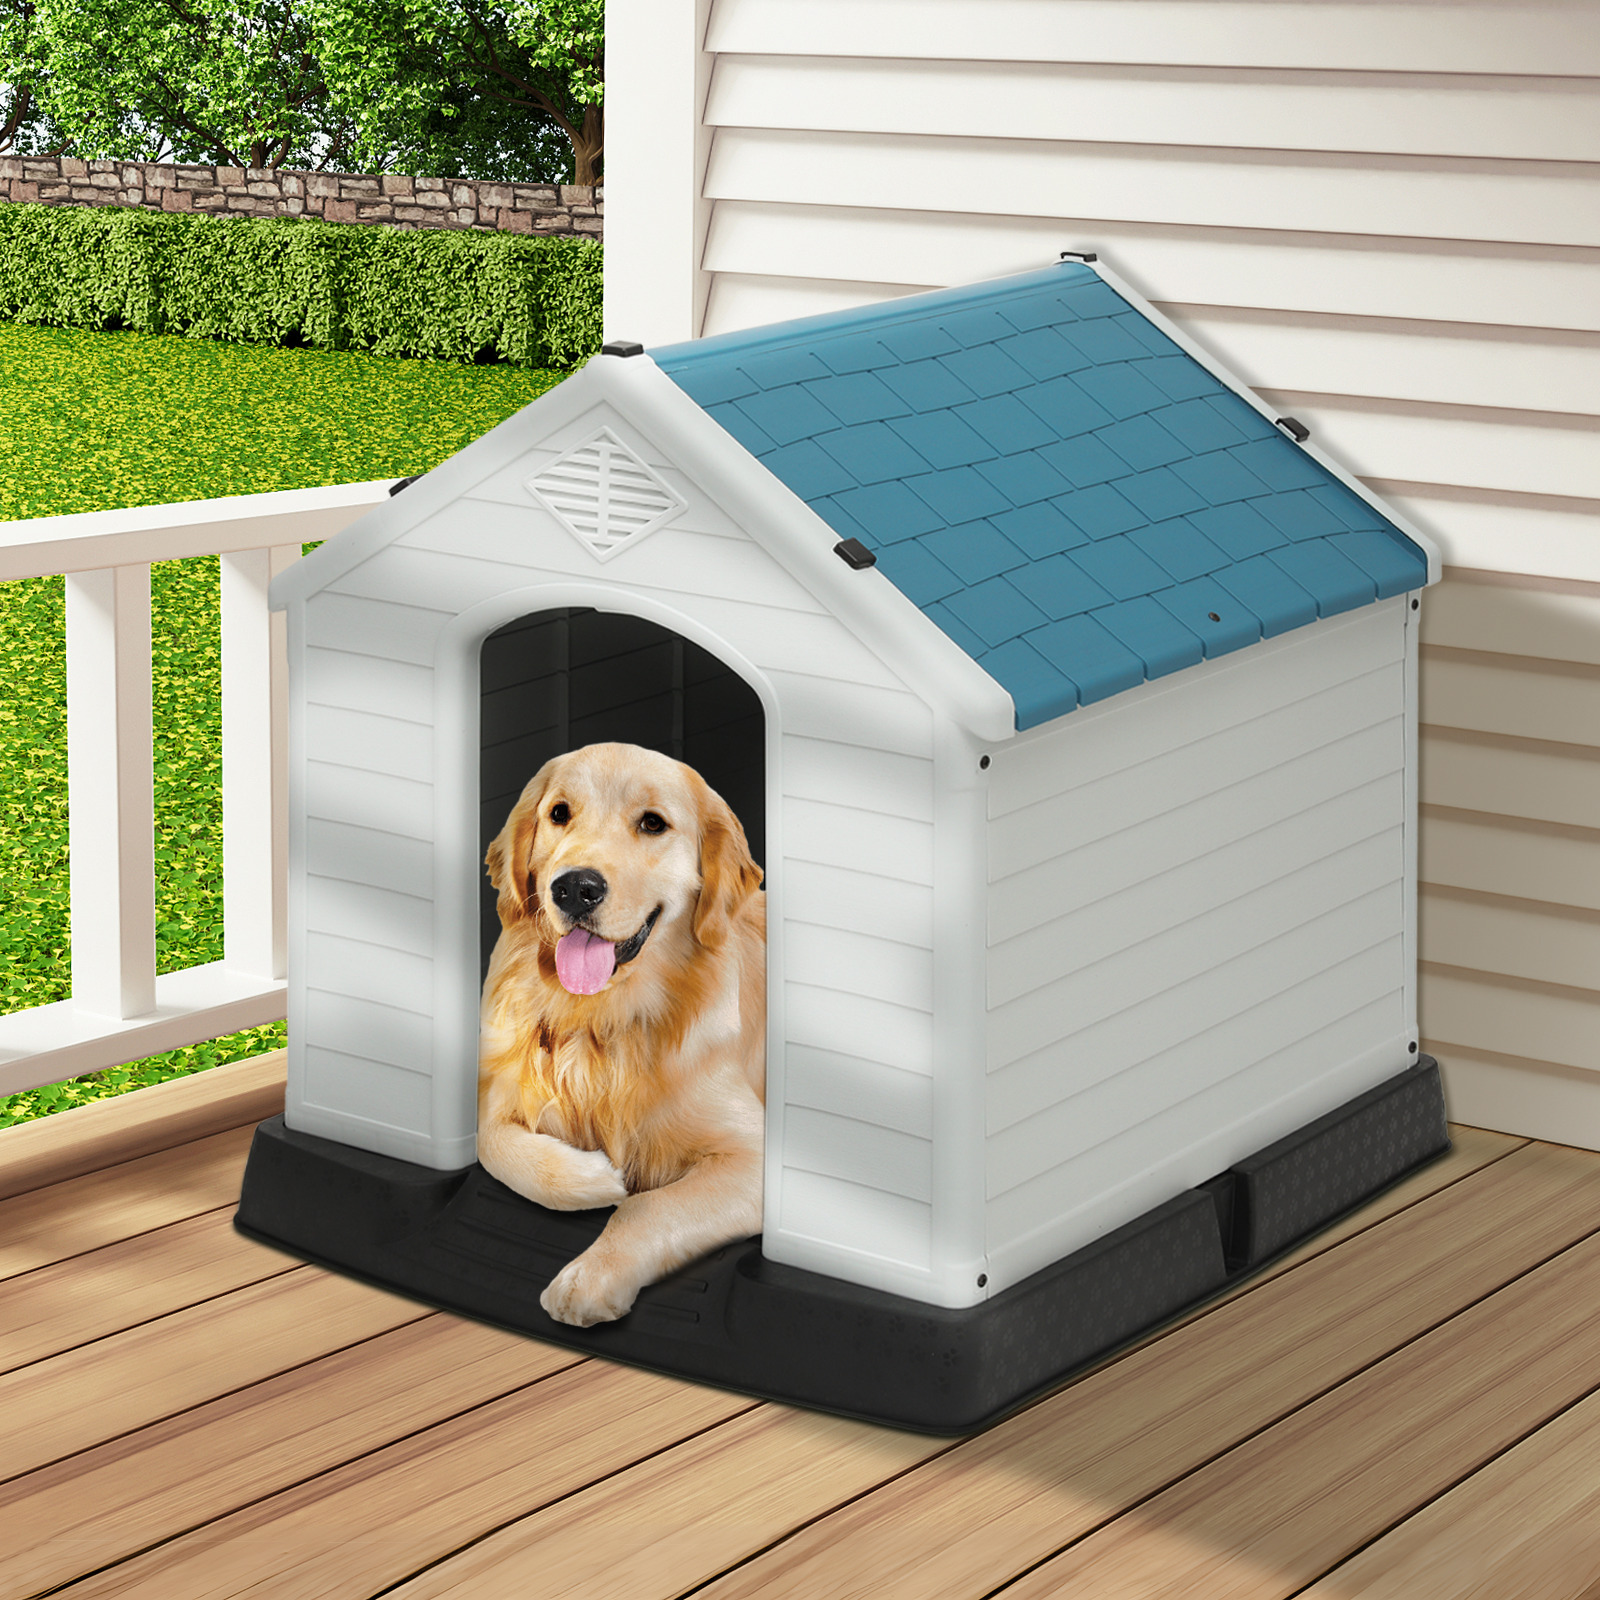 thinkstar 39"Plastic Dog House Puppy Shelter Weatherproof Durable Pet Kennel Elevated Base